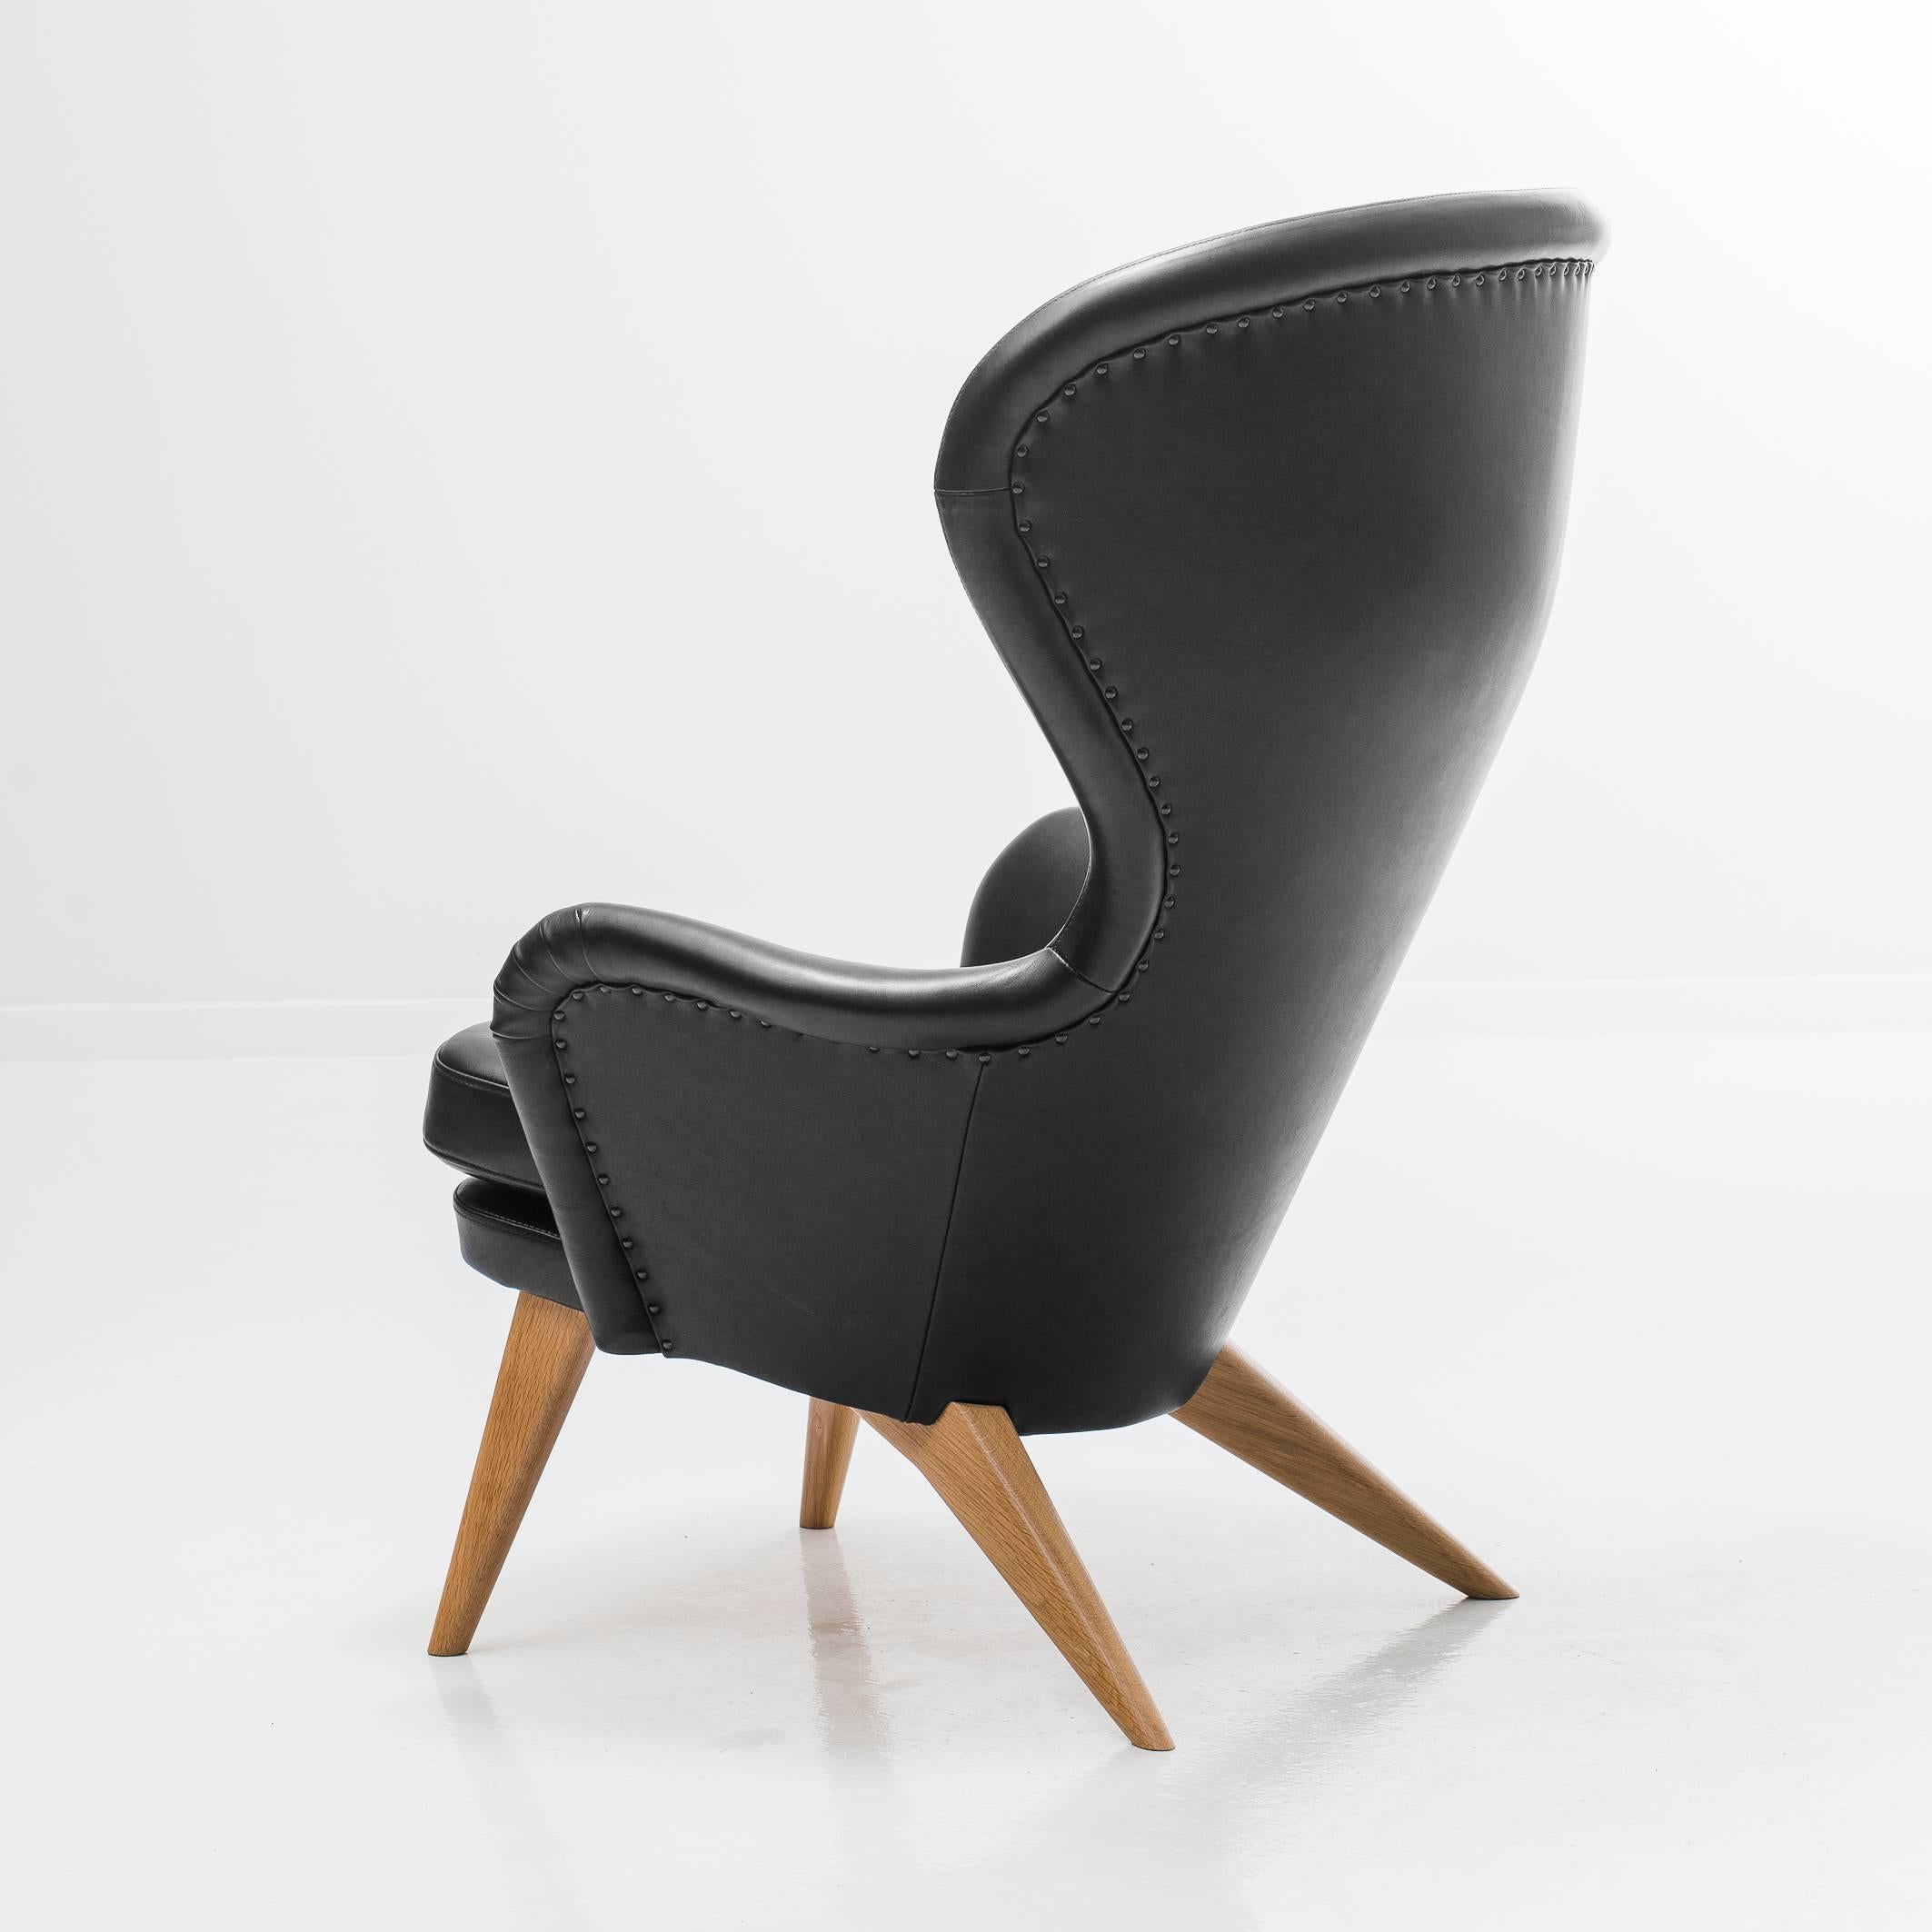 Finnish Siesta Lounge Chair in Black Leather Design by Carl Gustav Hiort af Ornäs For Sale